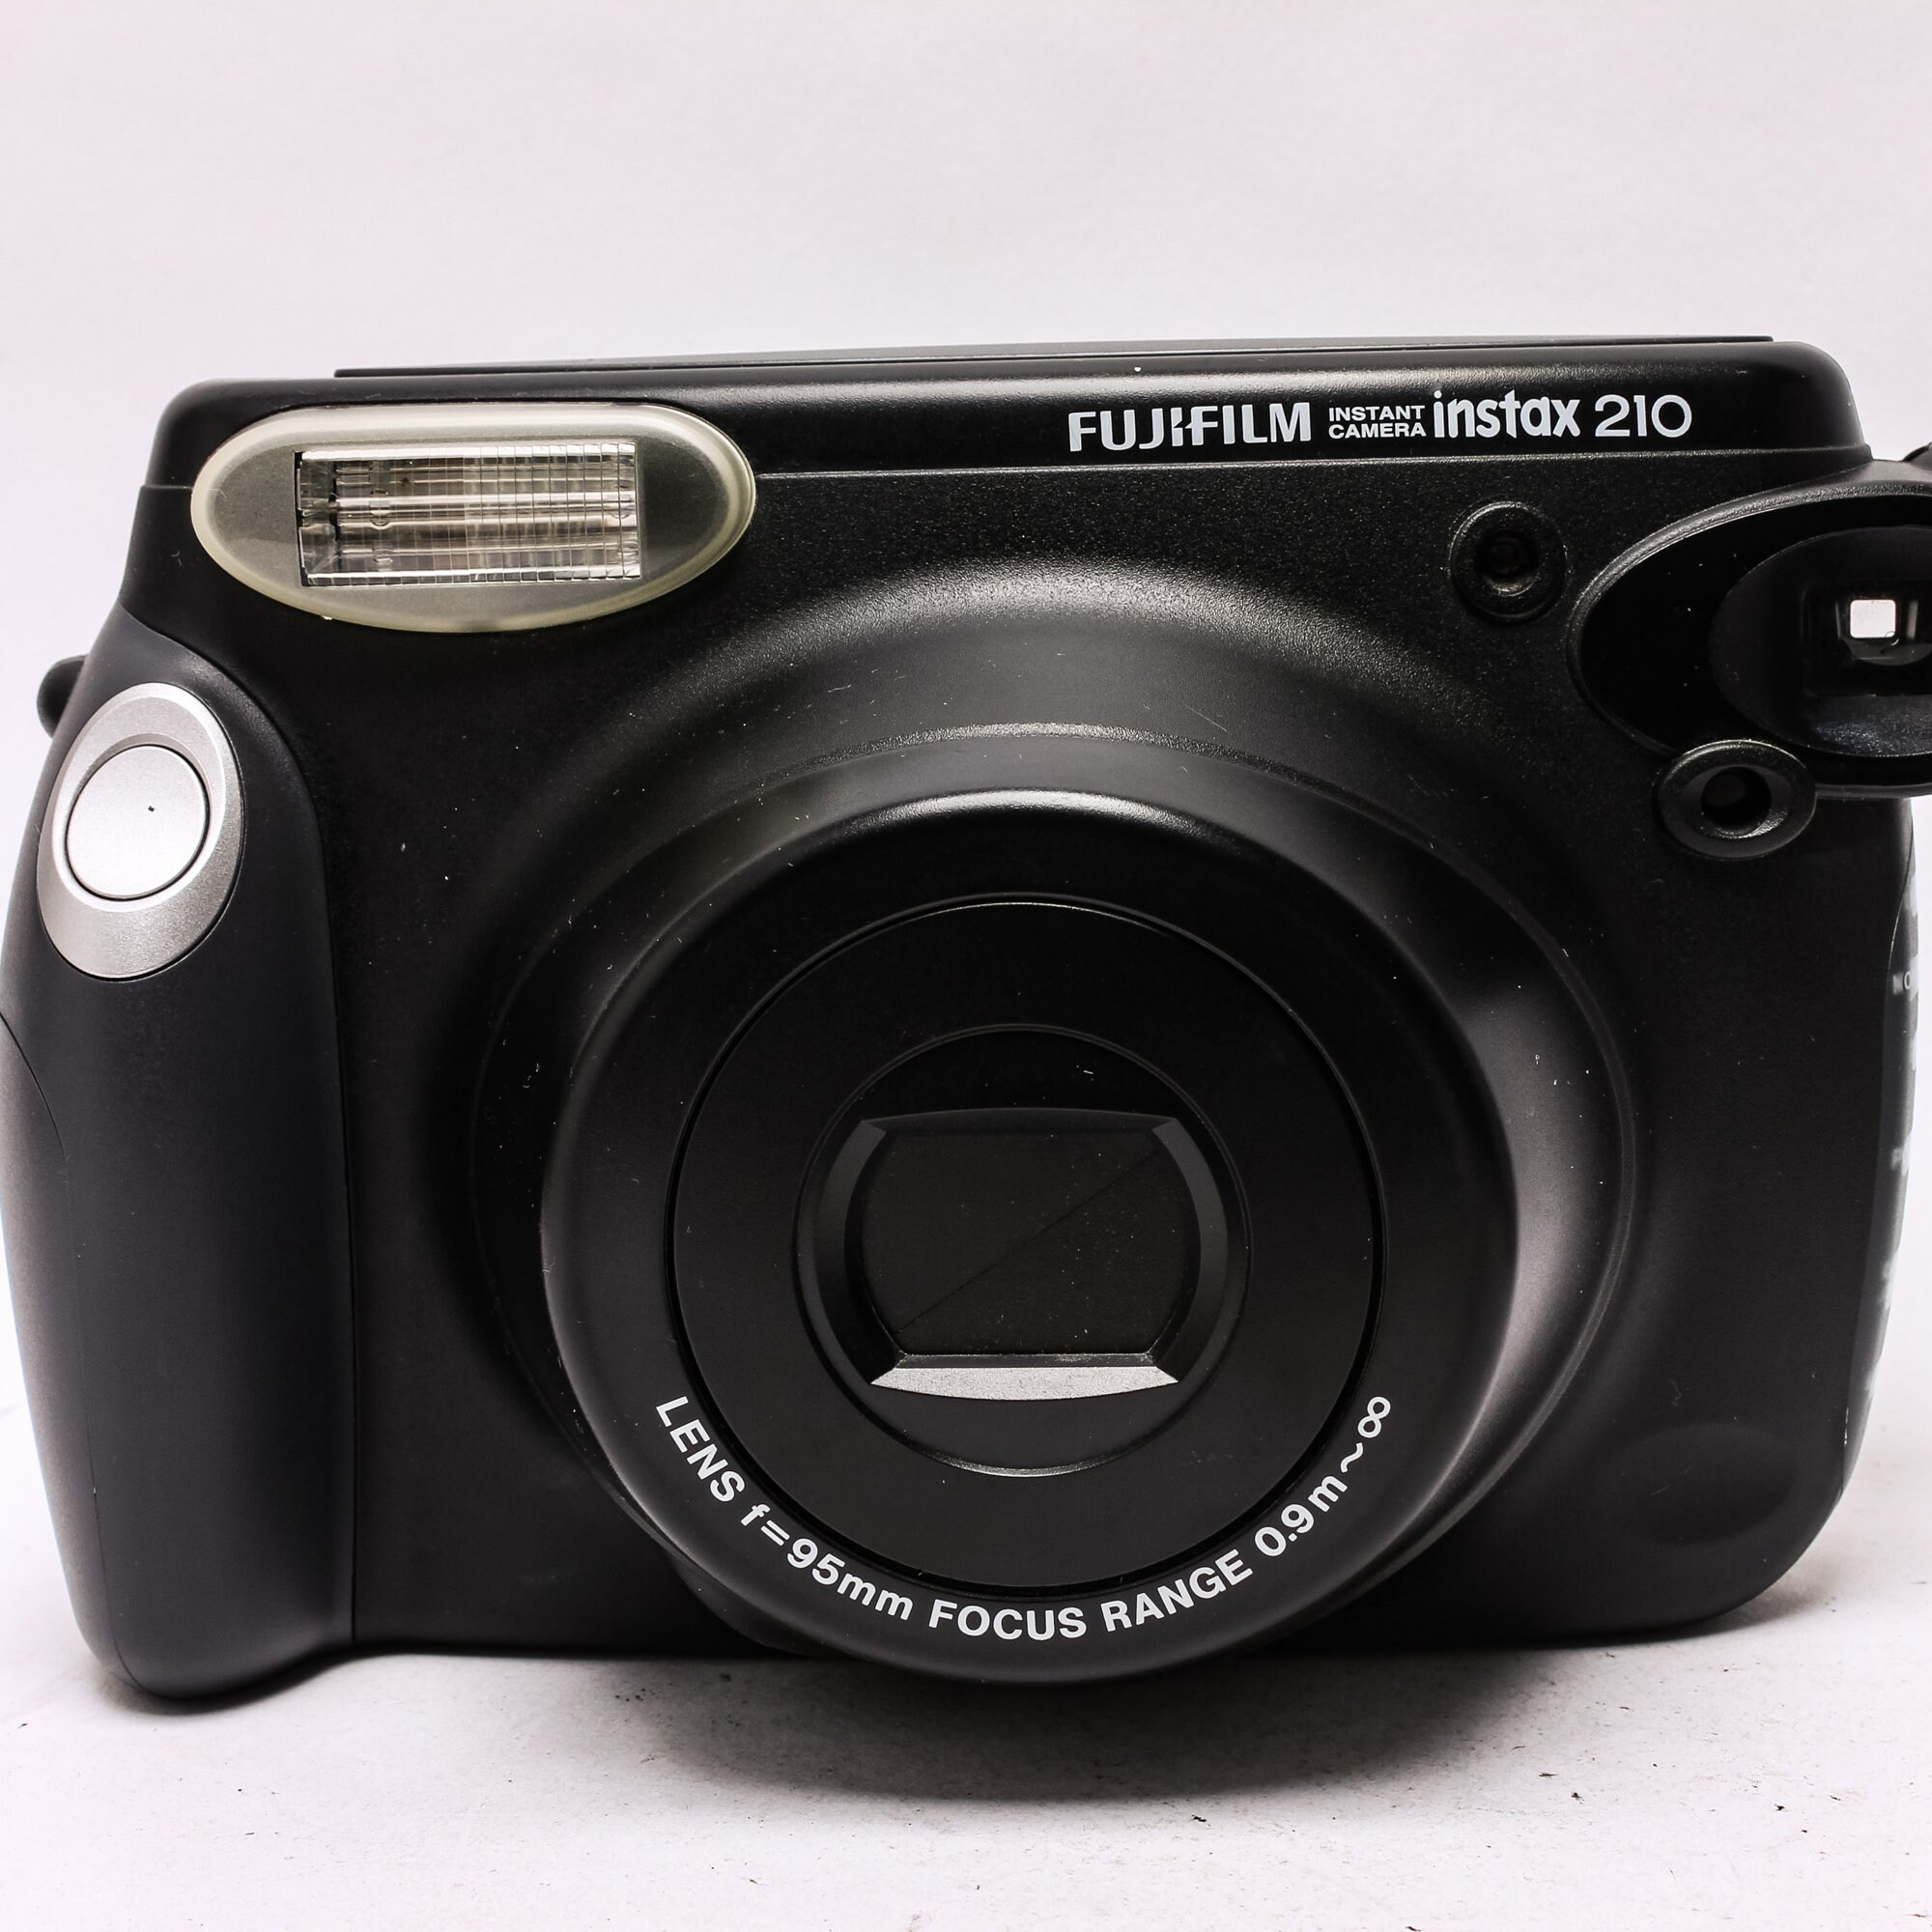 137,94 € - Camara Instantanea Fujifilm Instax Mini 11 Gris Carbón